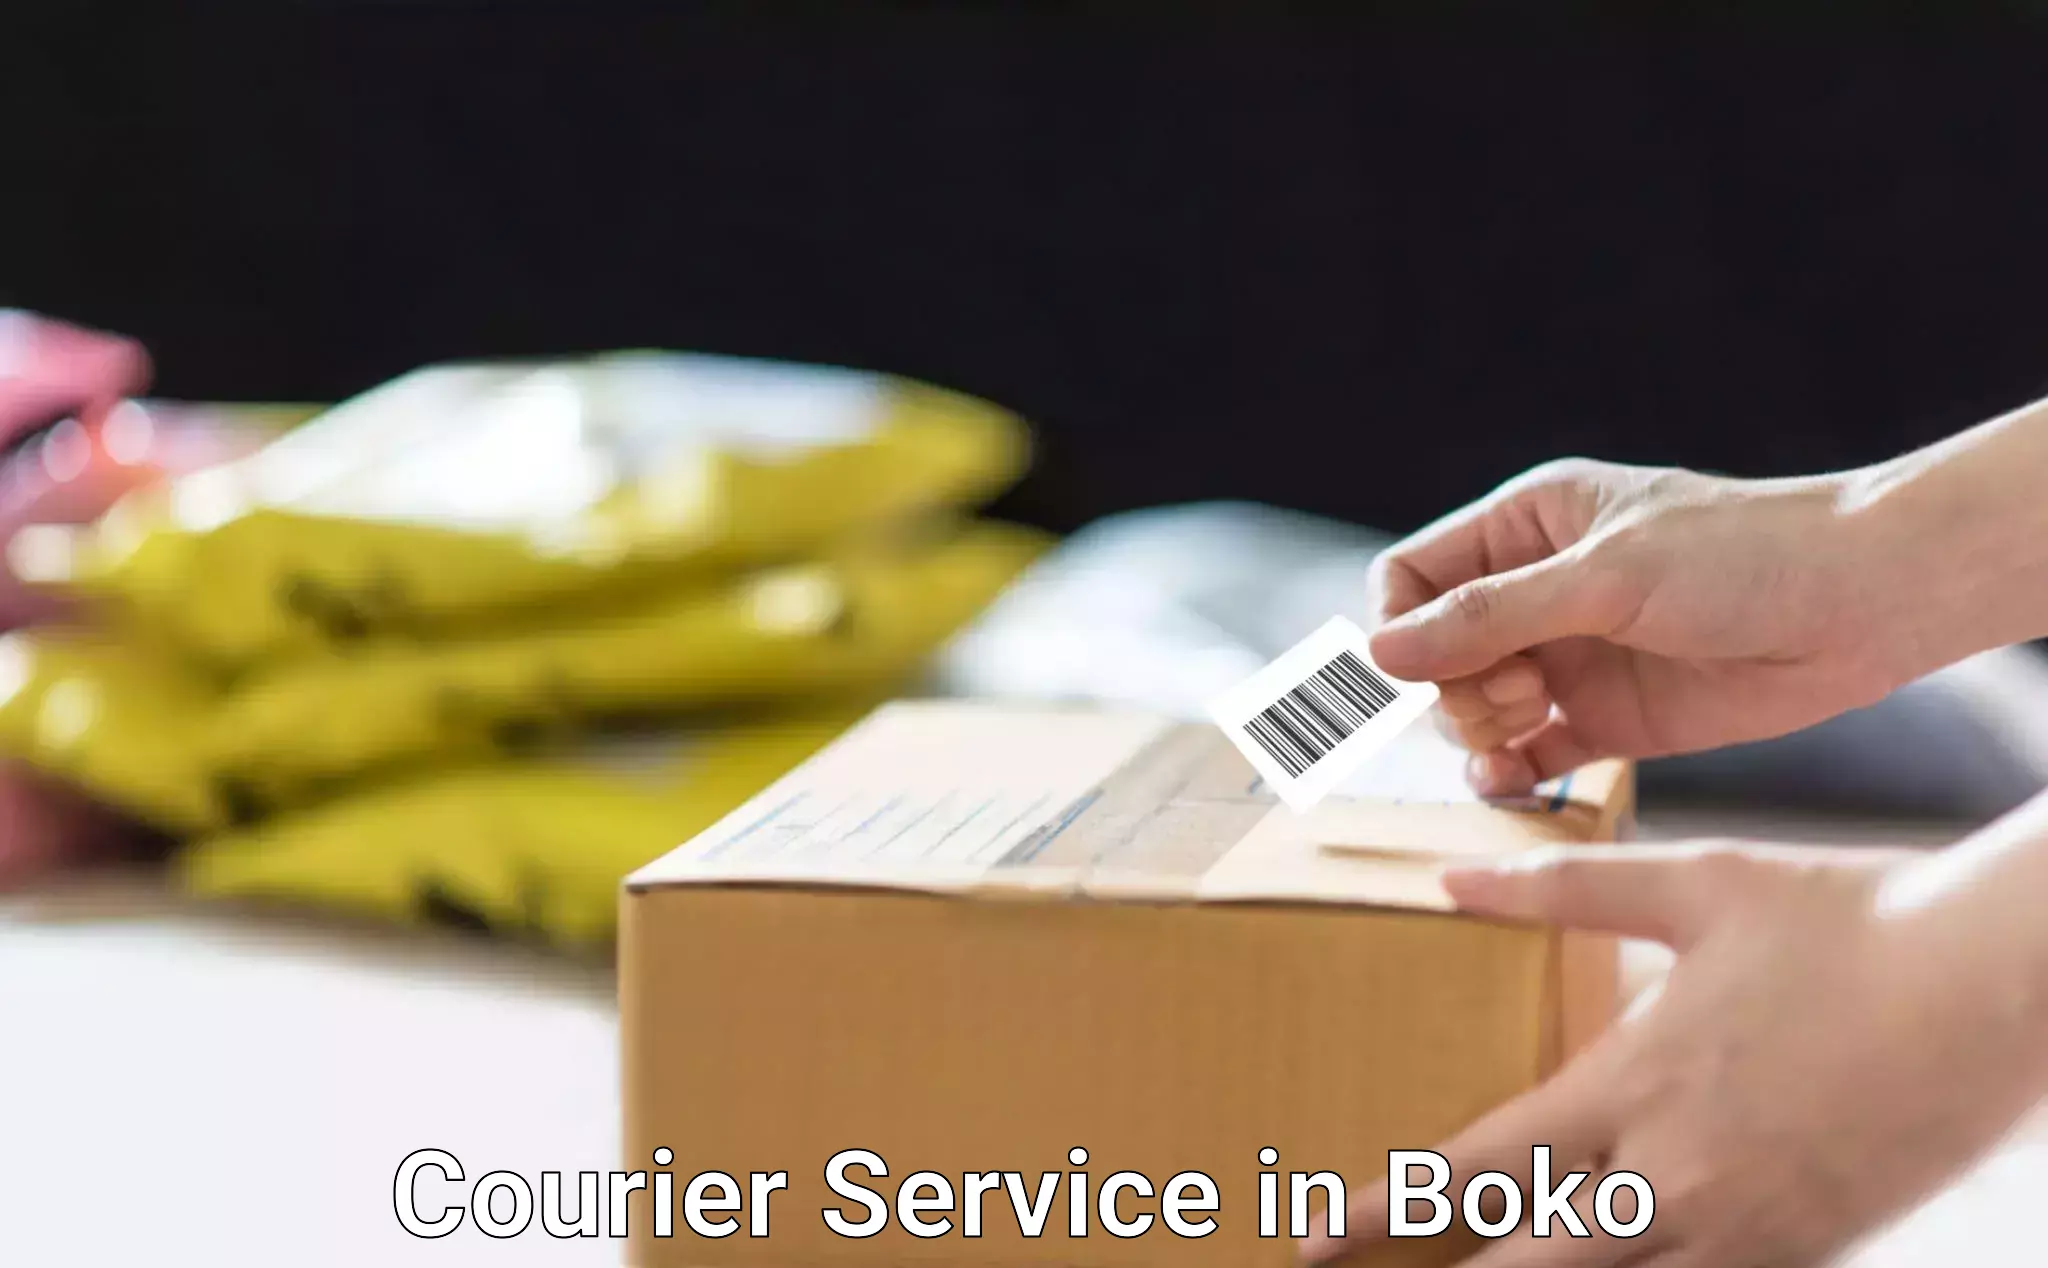 Multi-package shipping in Boko